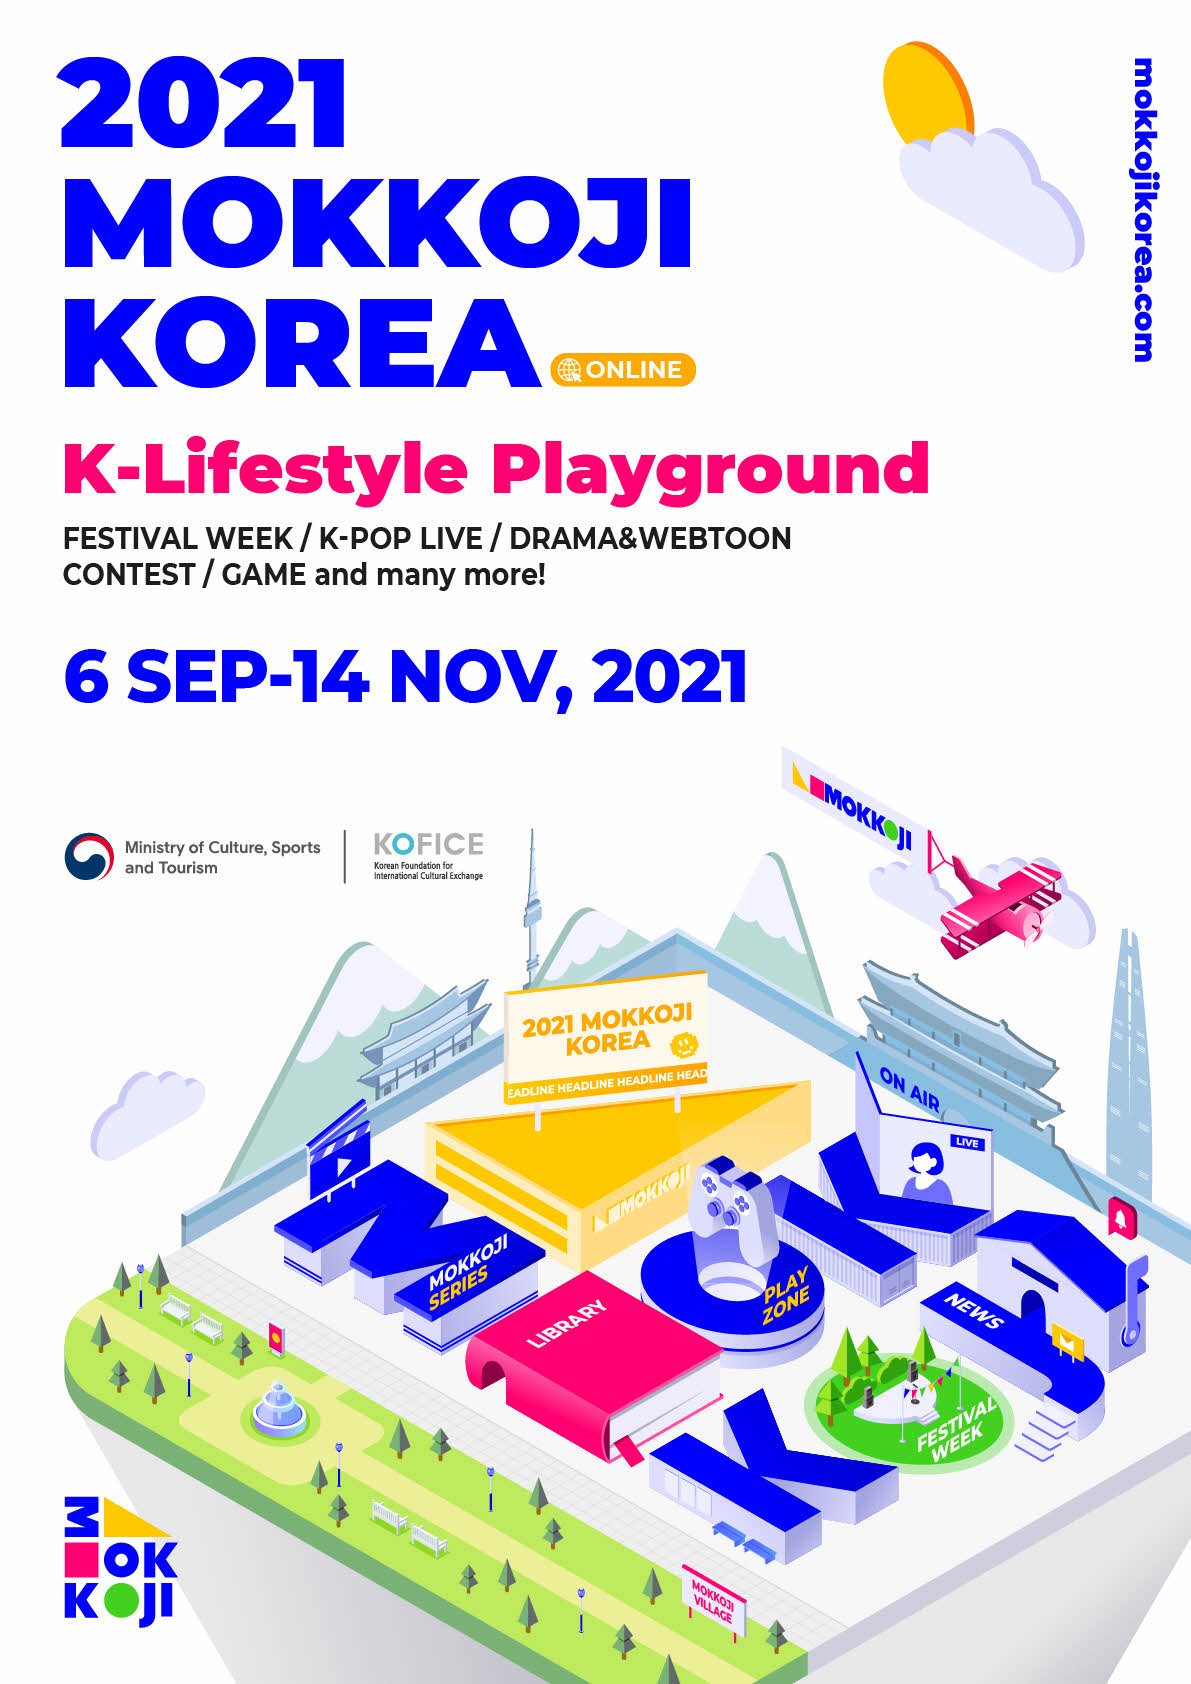 Enjoy Korean Culture with K-Pop Stars, MOKKOJI KOREA